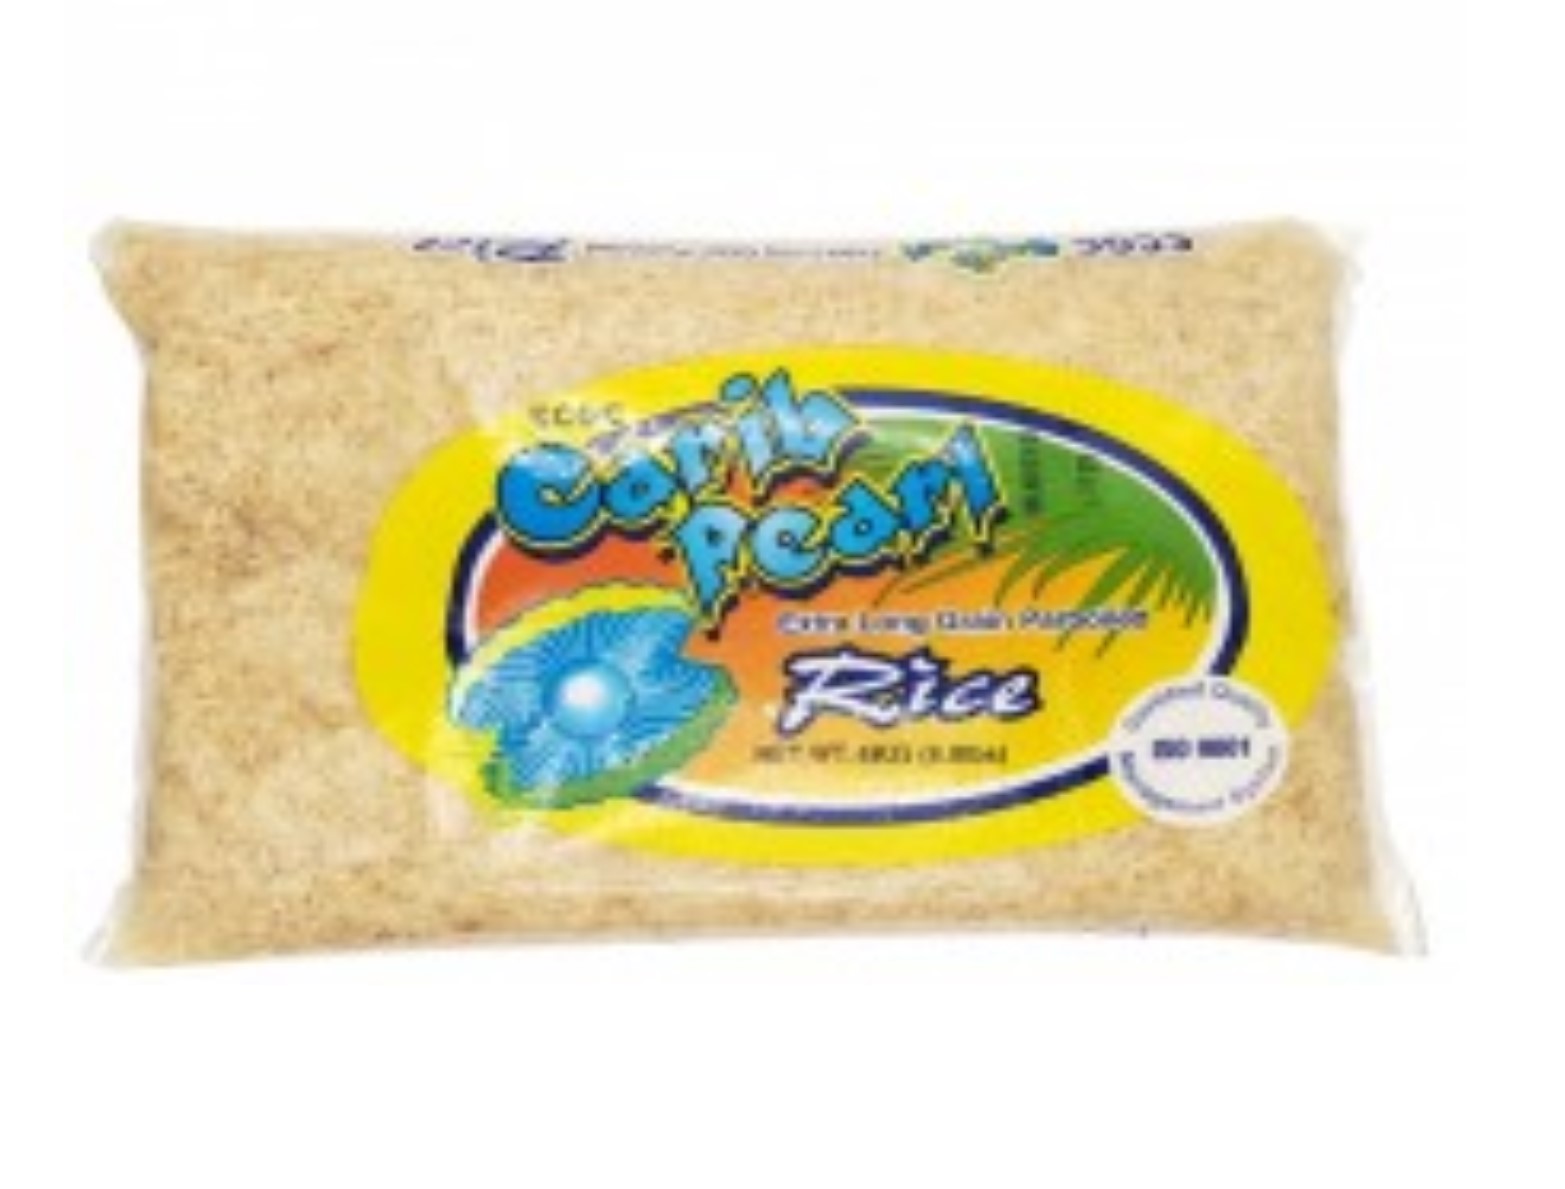 Carib Pearl Parboiled Rice 800G